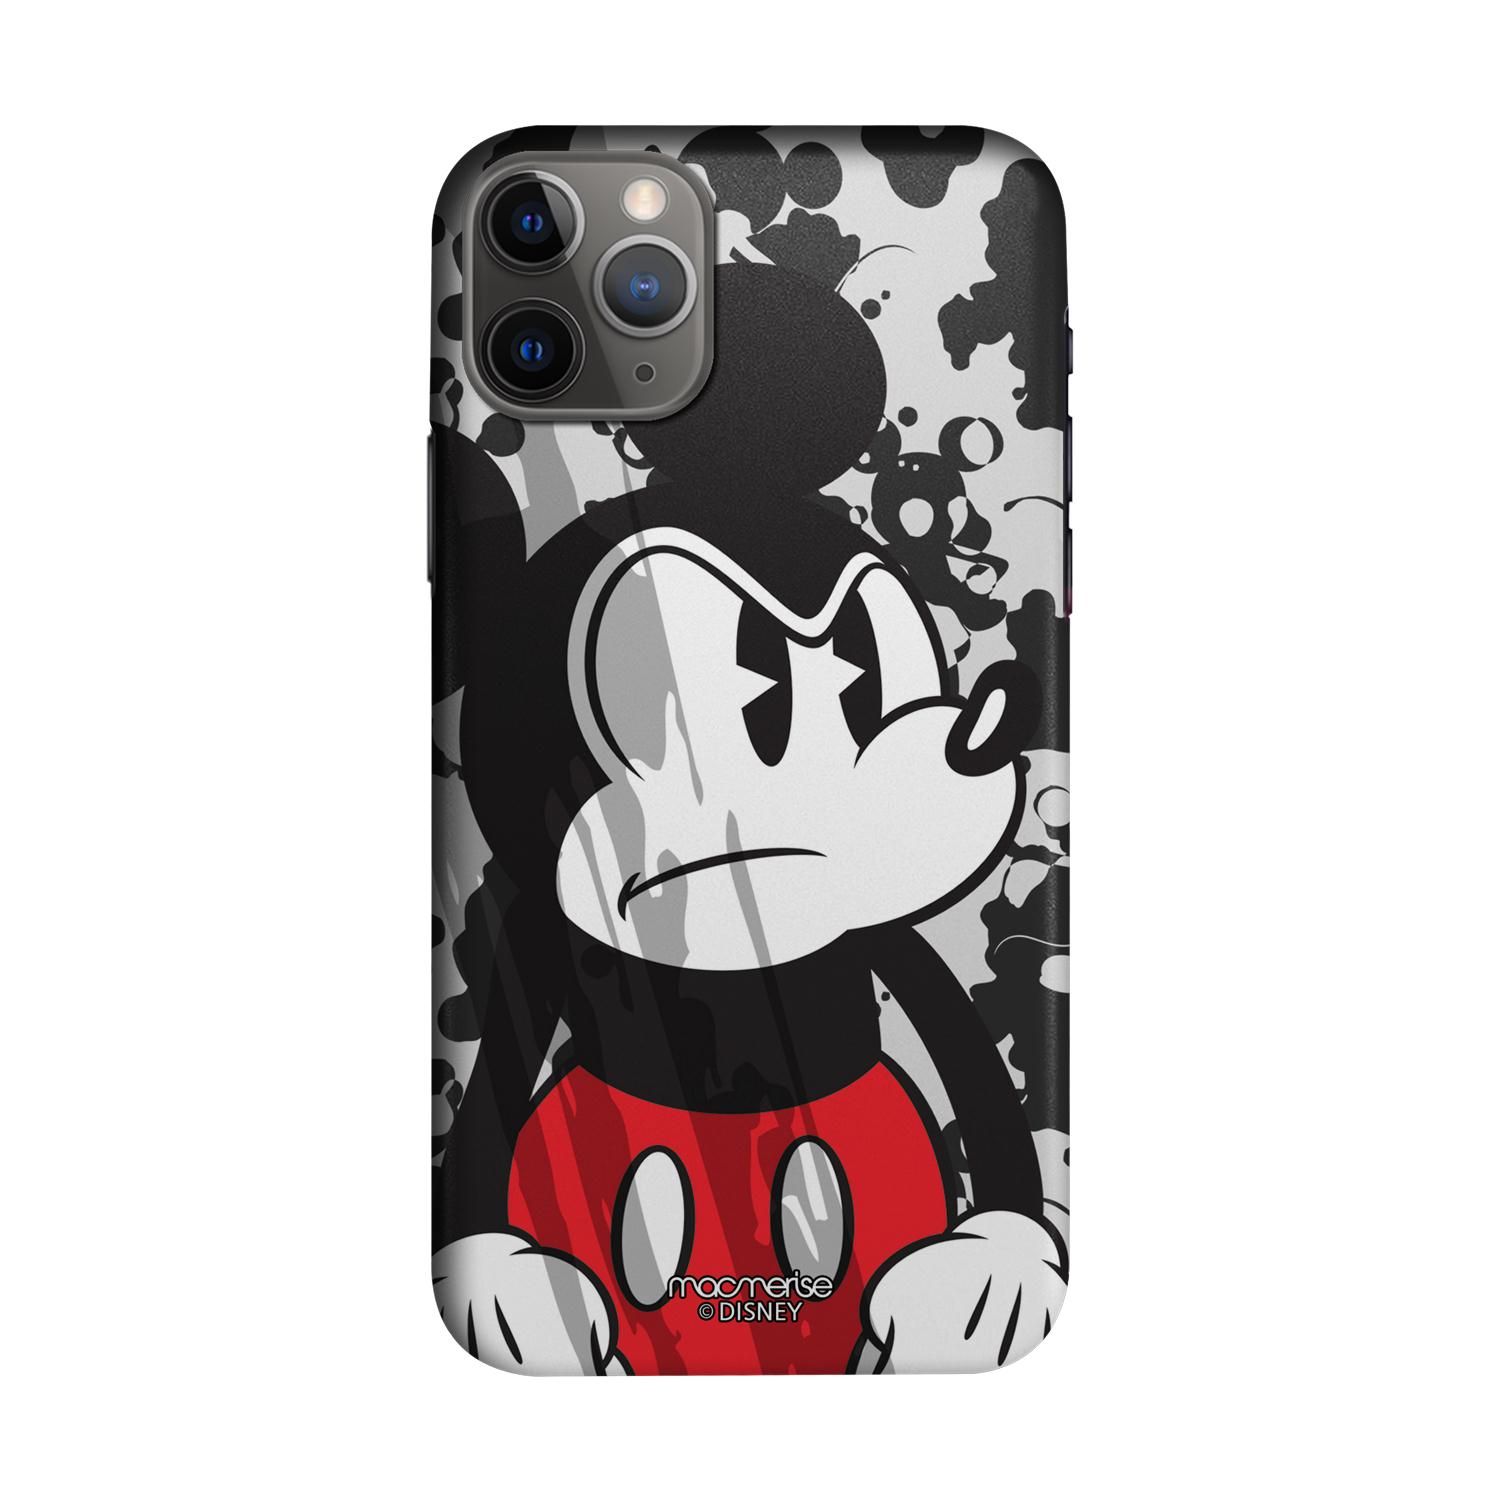 Buy Grumpy Mickey - Sleek Phone Case for iPhone 11 Pro Max Online